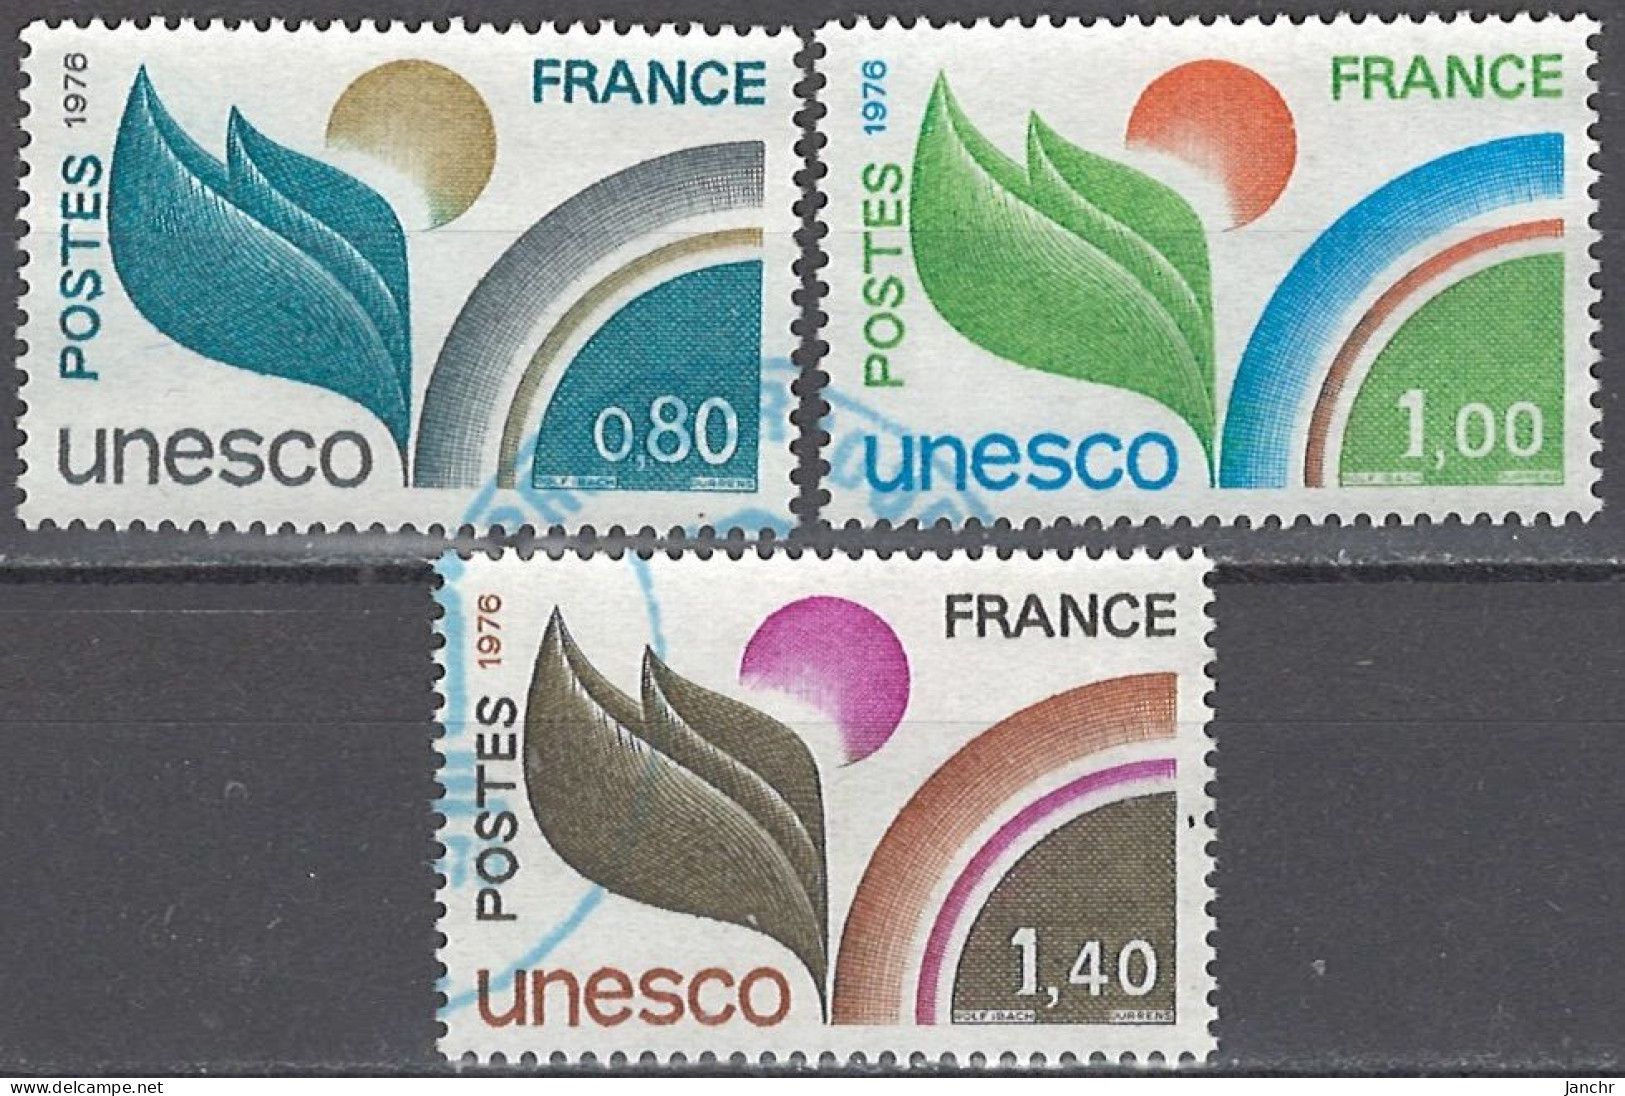 France Frankreich 1976. UNESCO. Mi.Nr. 16-18, Used O - Oblitérés